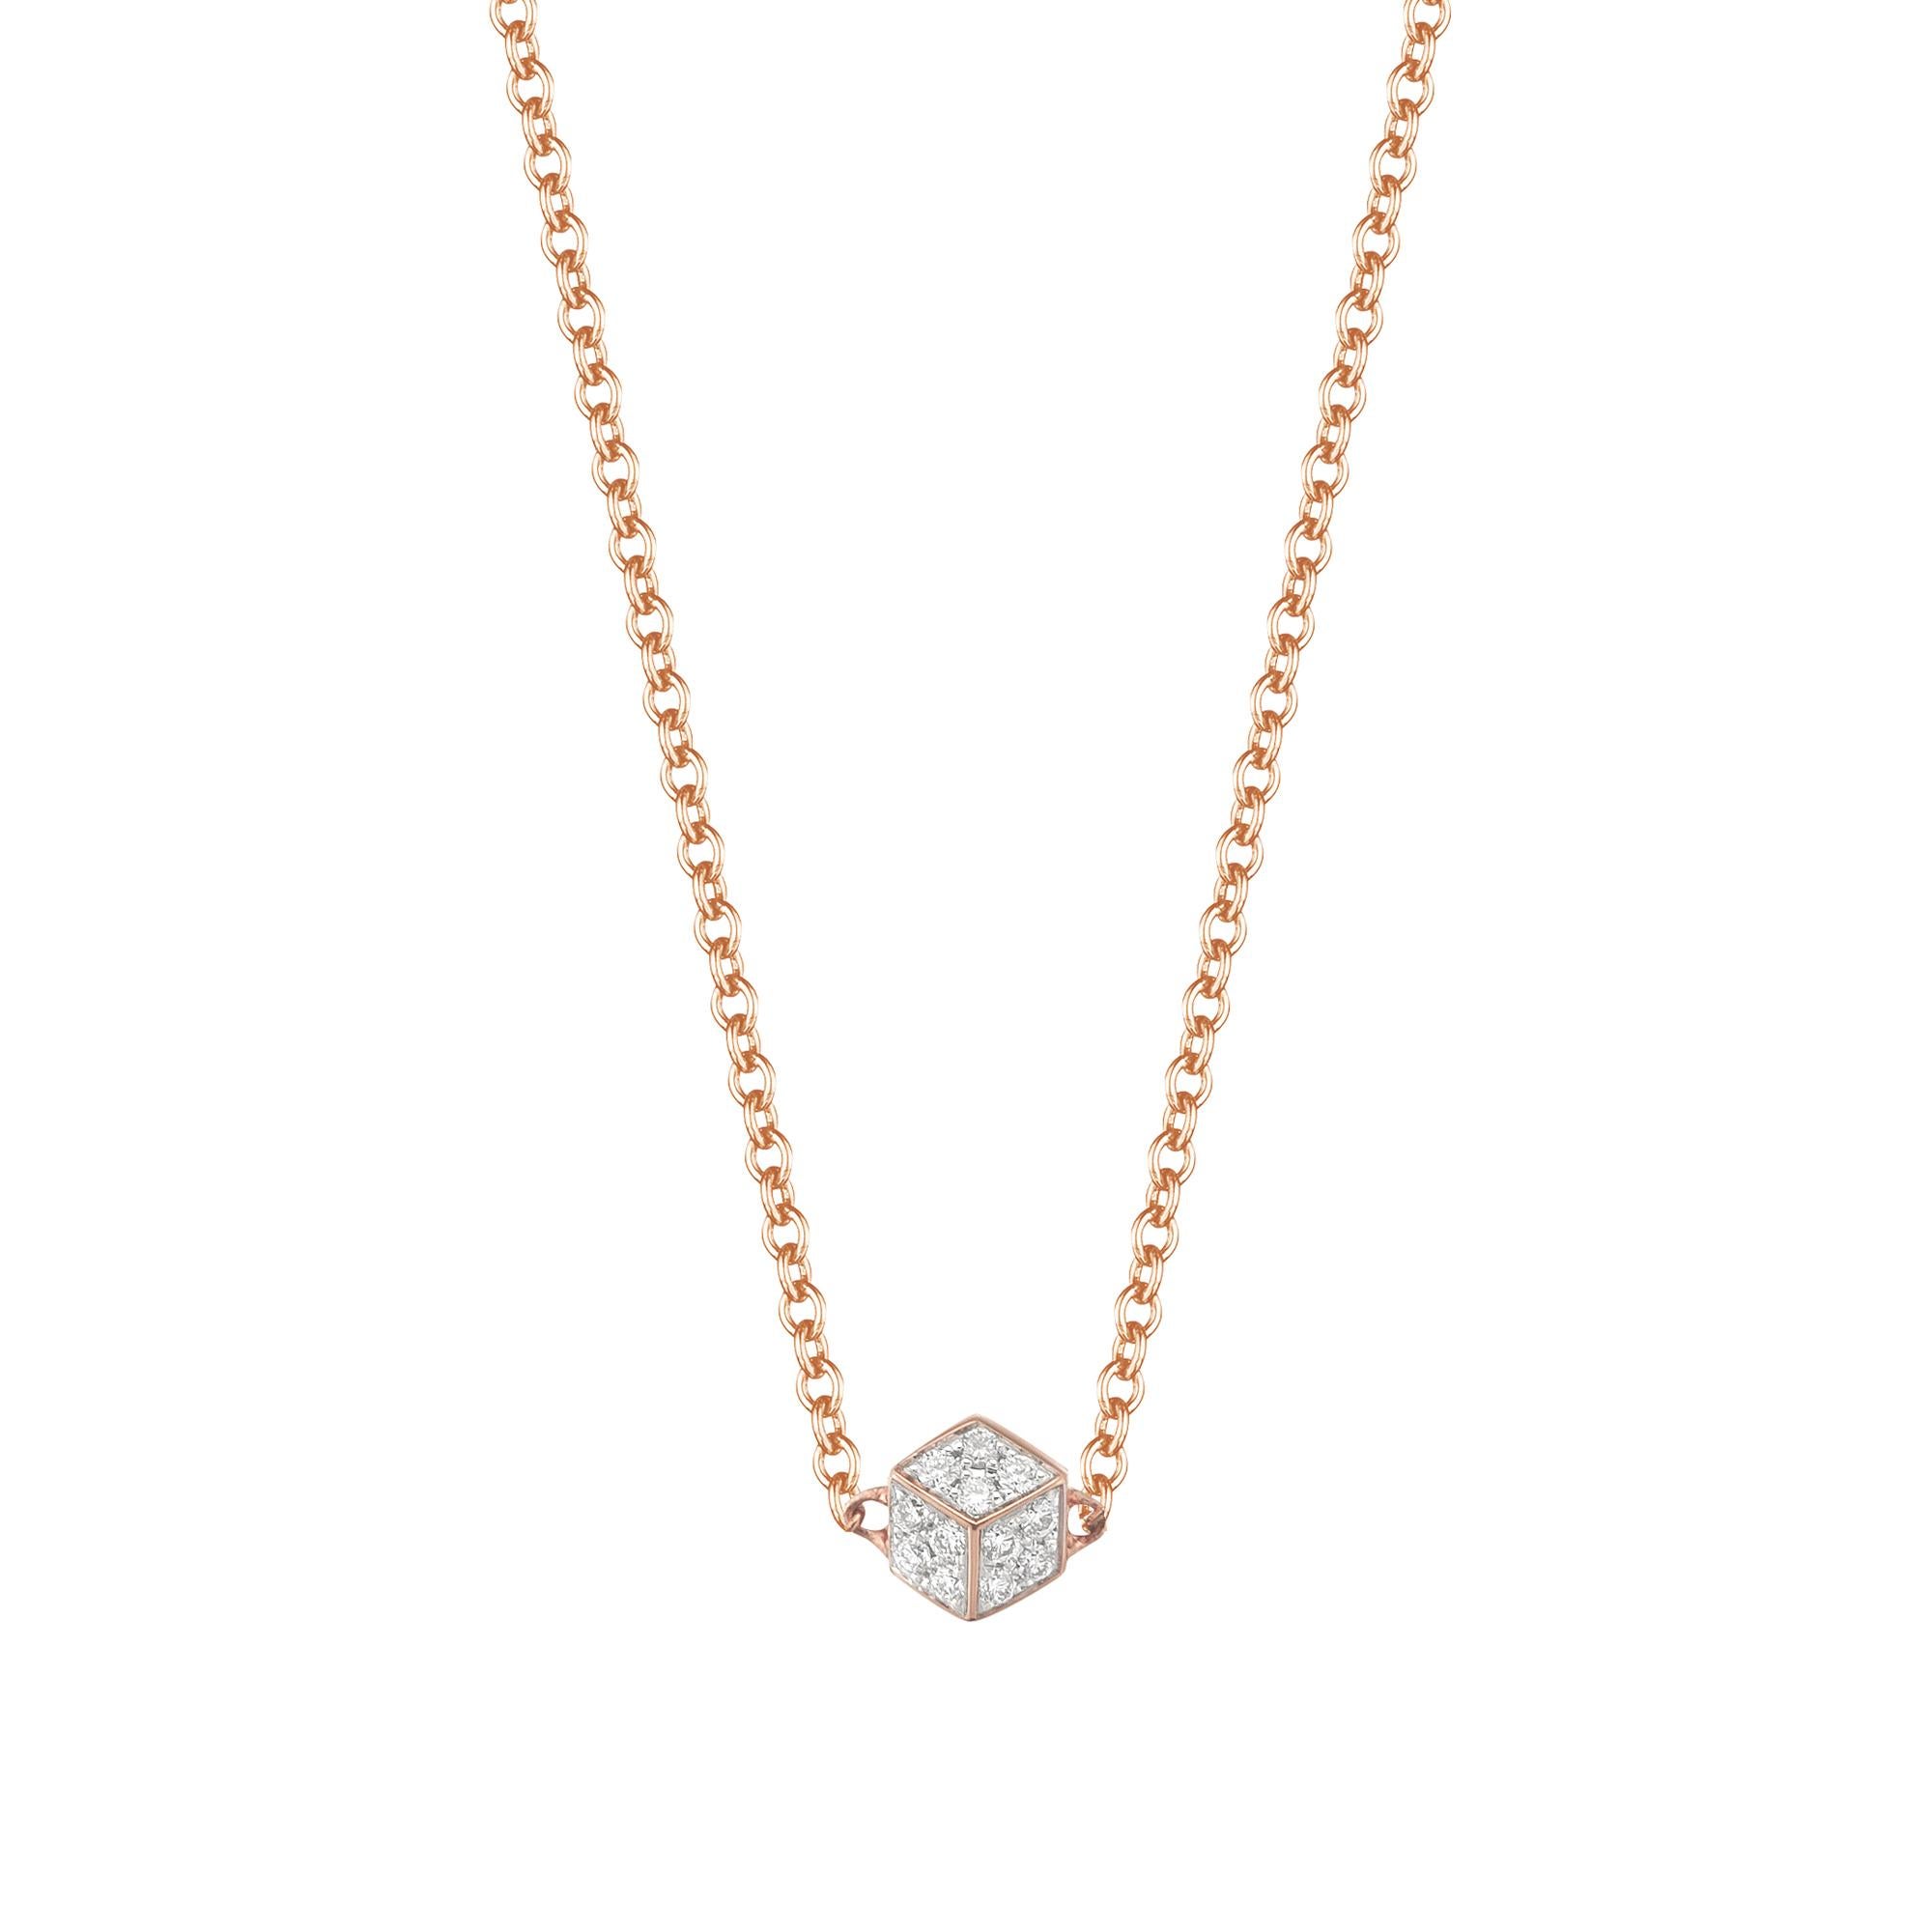 Paolo Costagli 18 Karat Rose Gold Brillante 'Natalie' Diamond Pendant Necklace